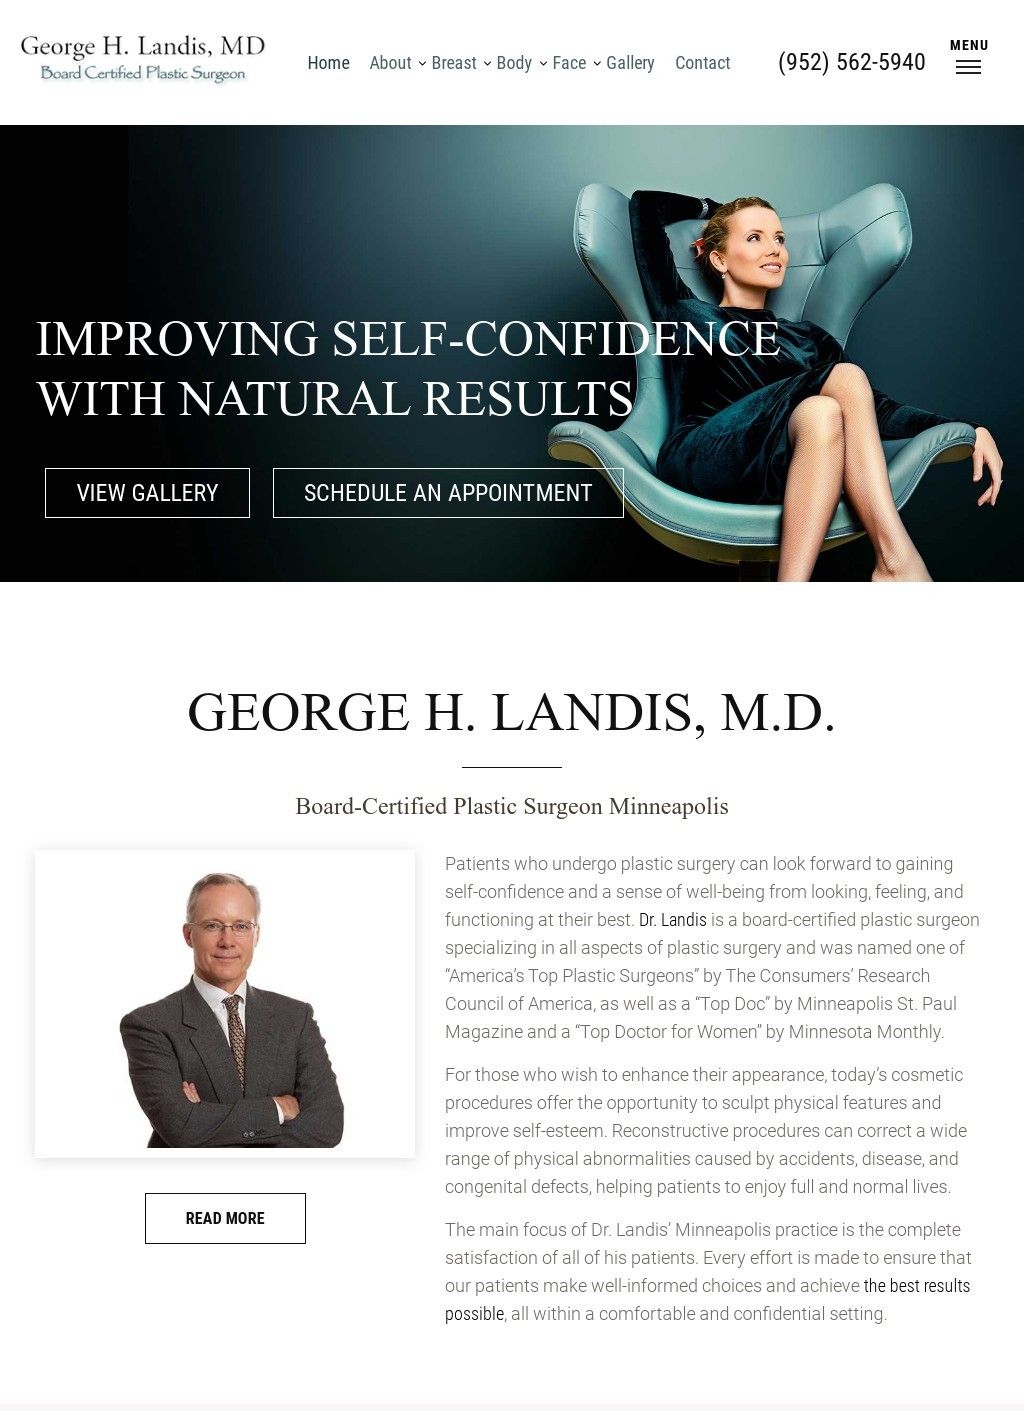 Dr. George H. Landis, MD